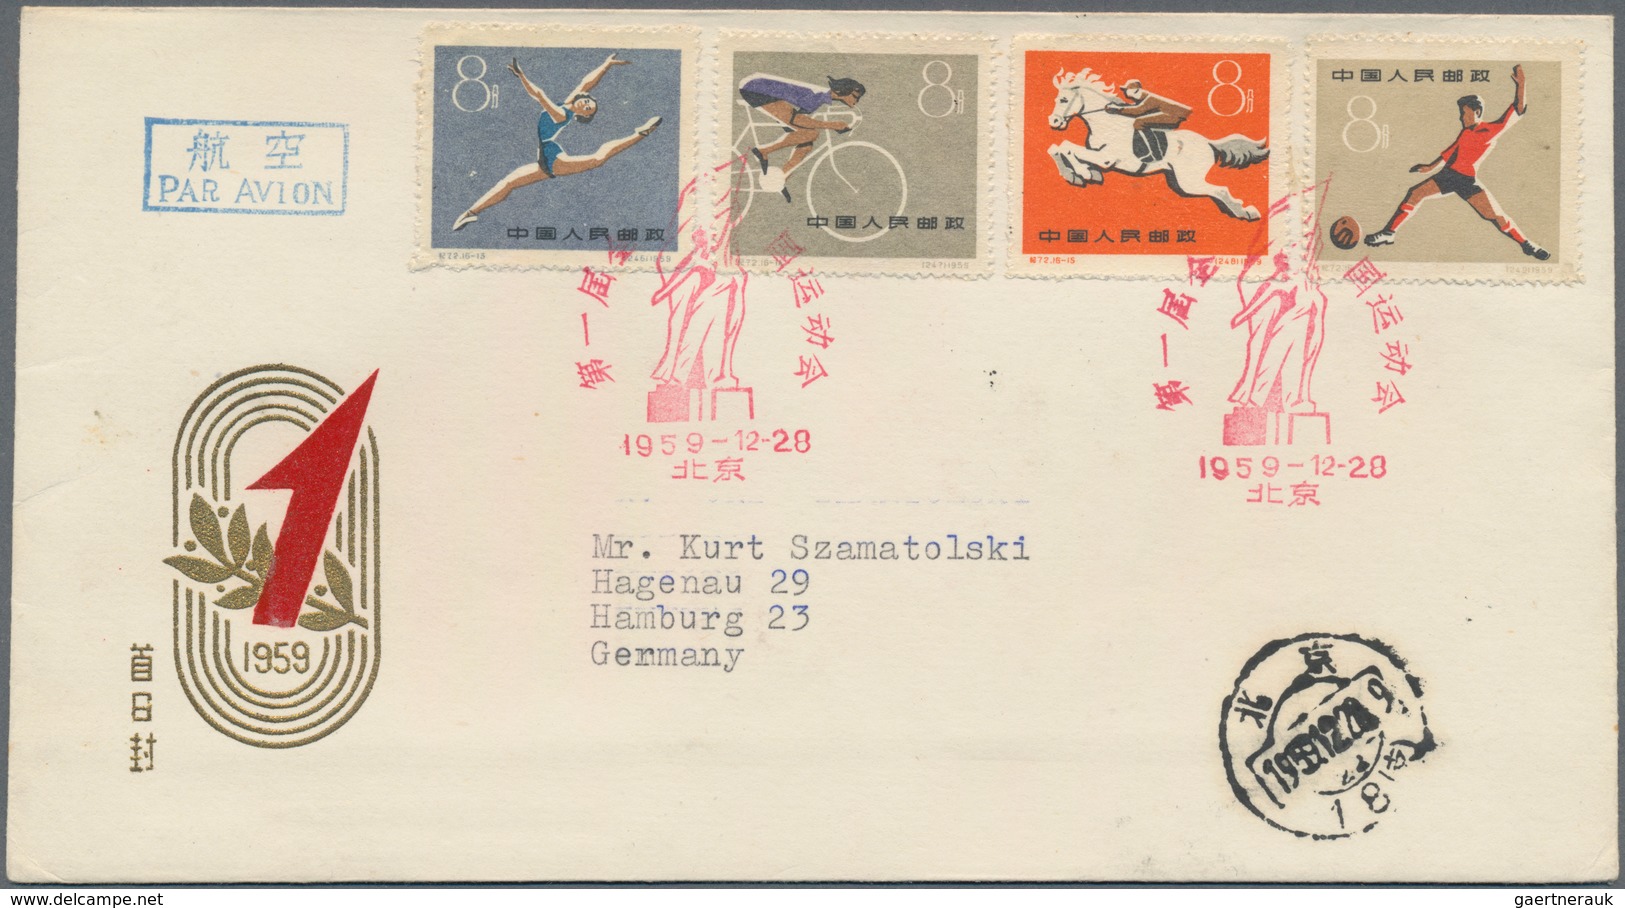 China - Volksrepublik: 1959, set of 4 FDCs addressed to Hamburg, Germany, bearing the full set of th